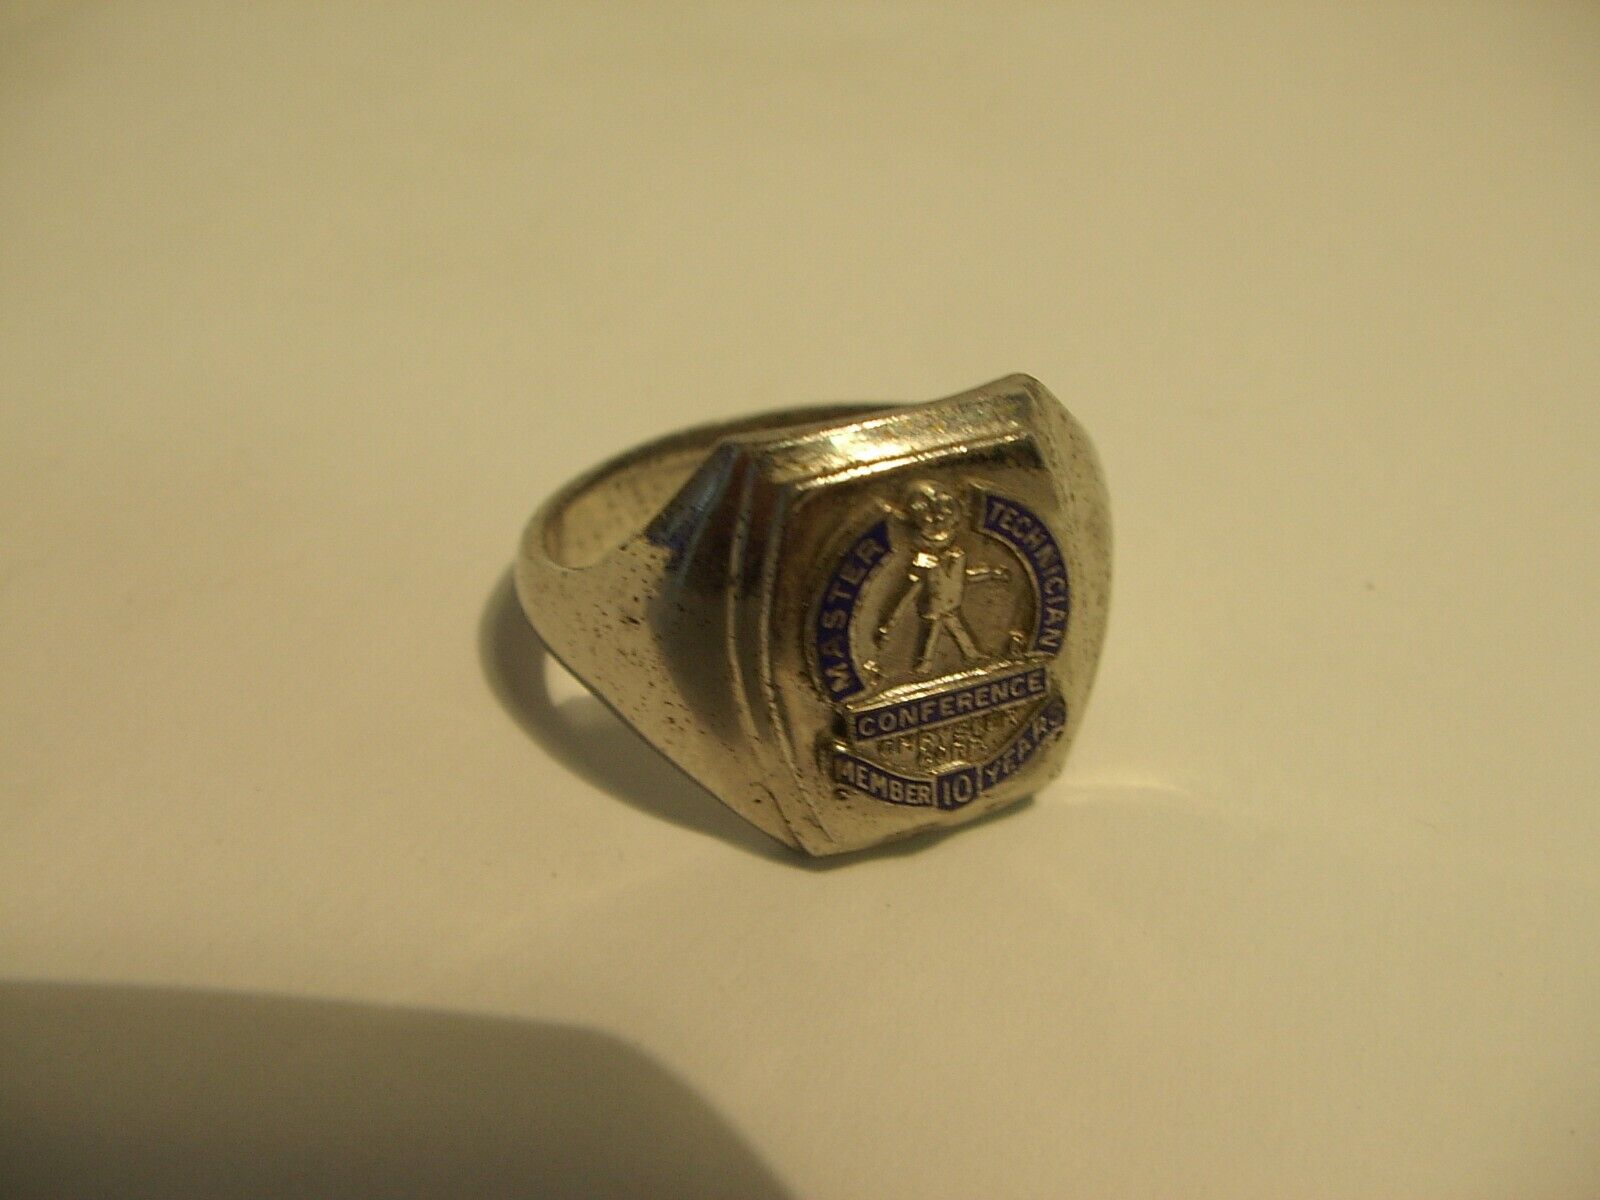 Vintage Master Technician Chrysler Corp. 10 Year member sterling ring, 13